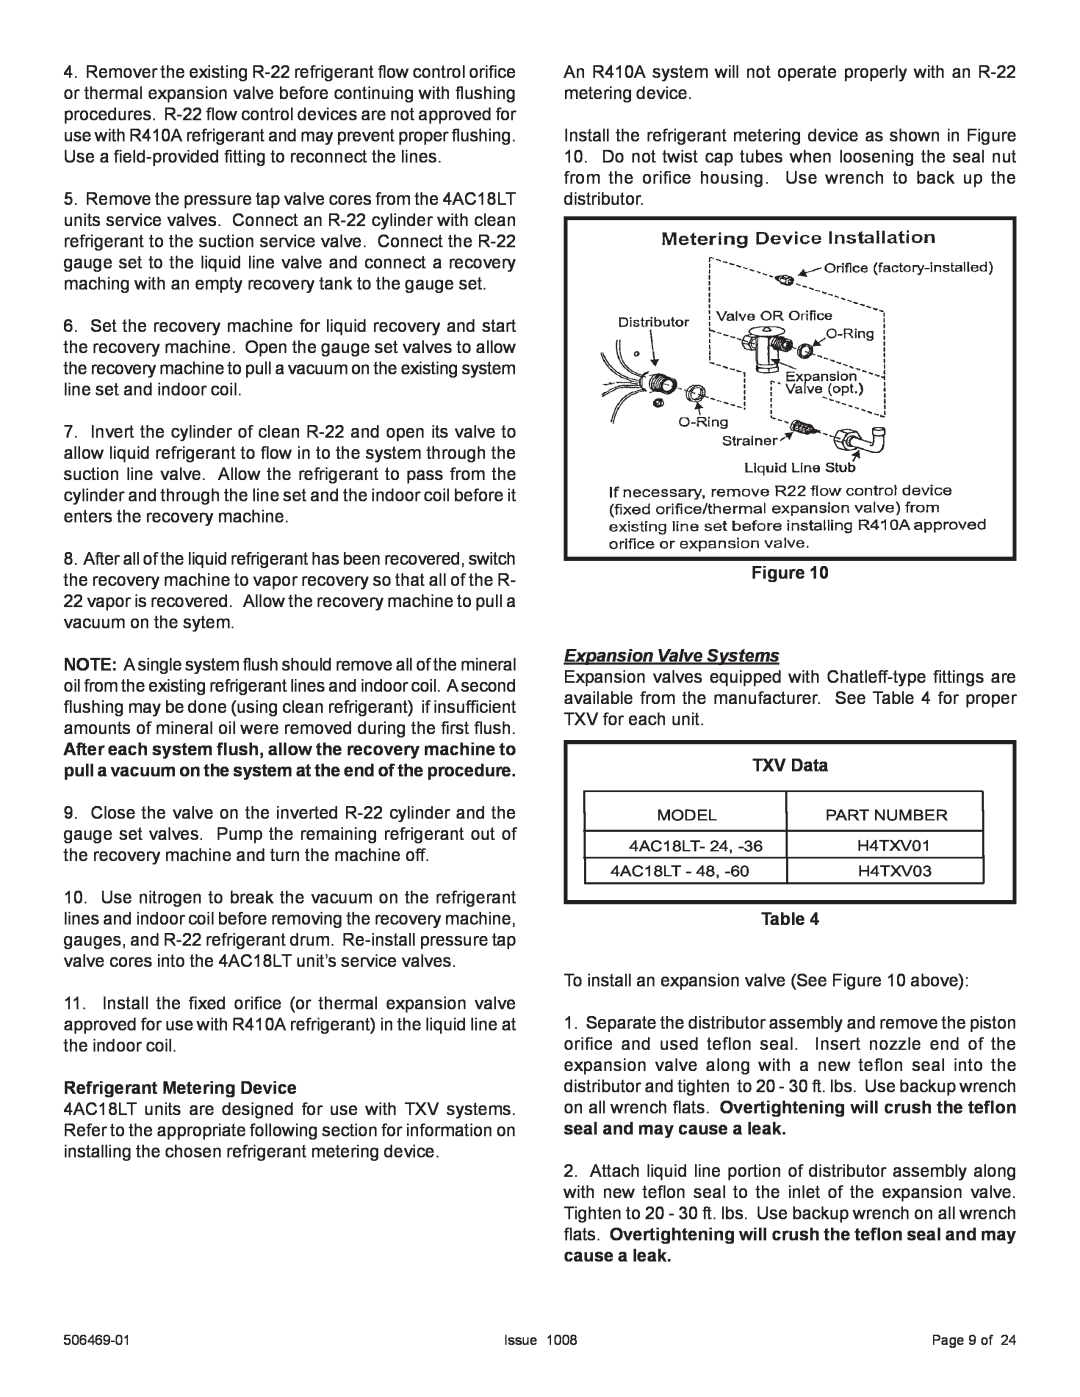 Allied Air Enterprises 4AC18LT manual Refrigerant Metering Device, Expansion Valve Systems, TXV Data 